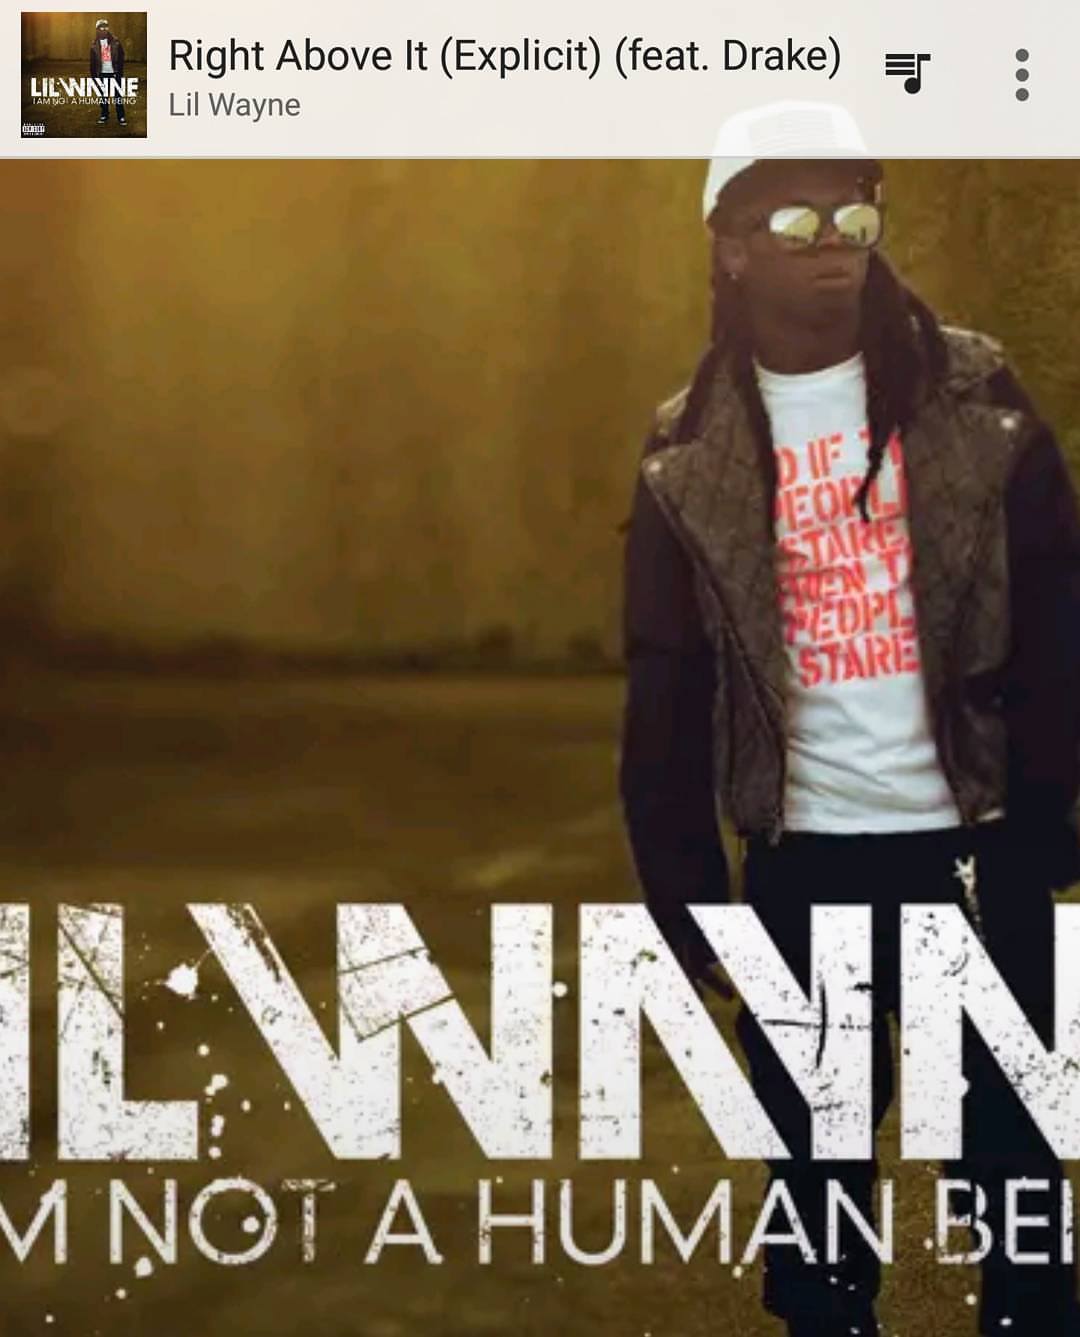 Photo of Lil' Wayne album cover